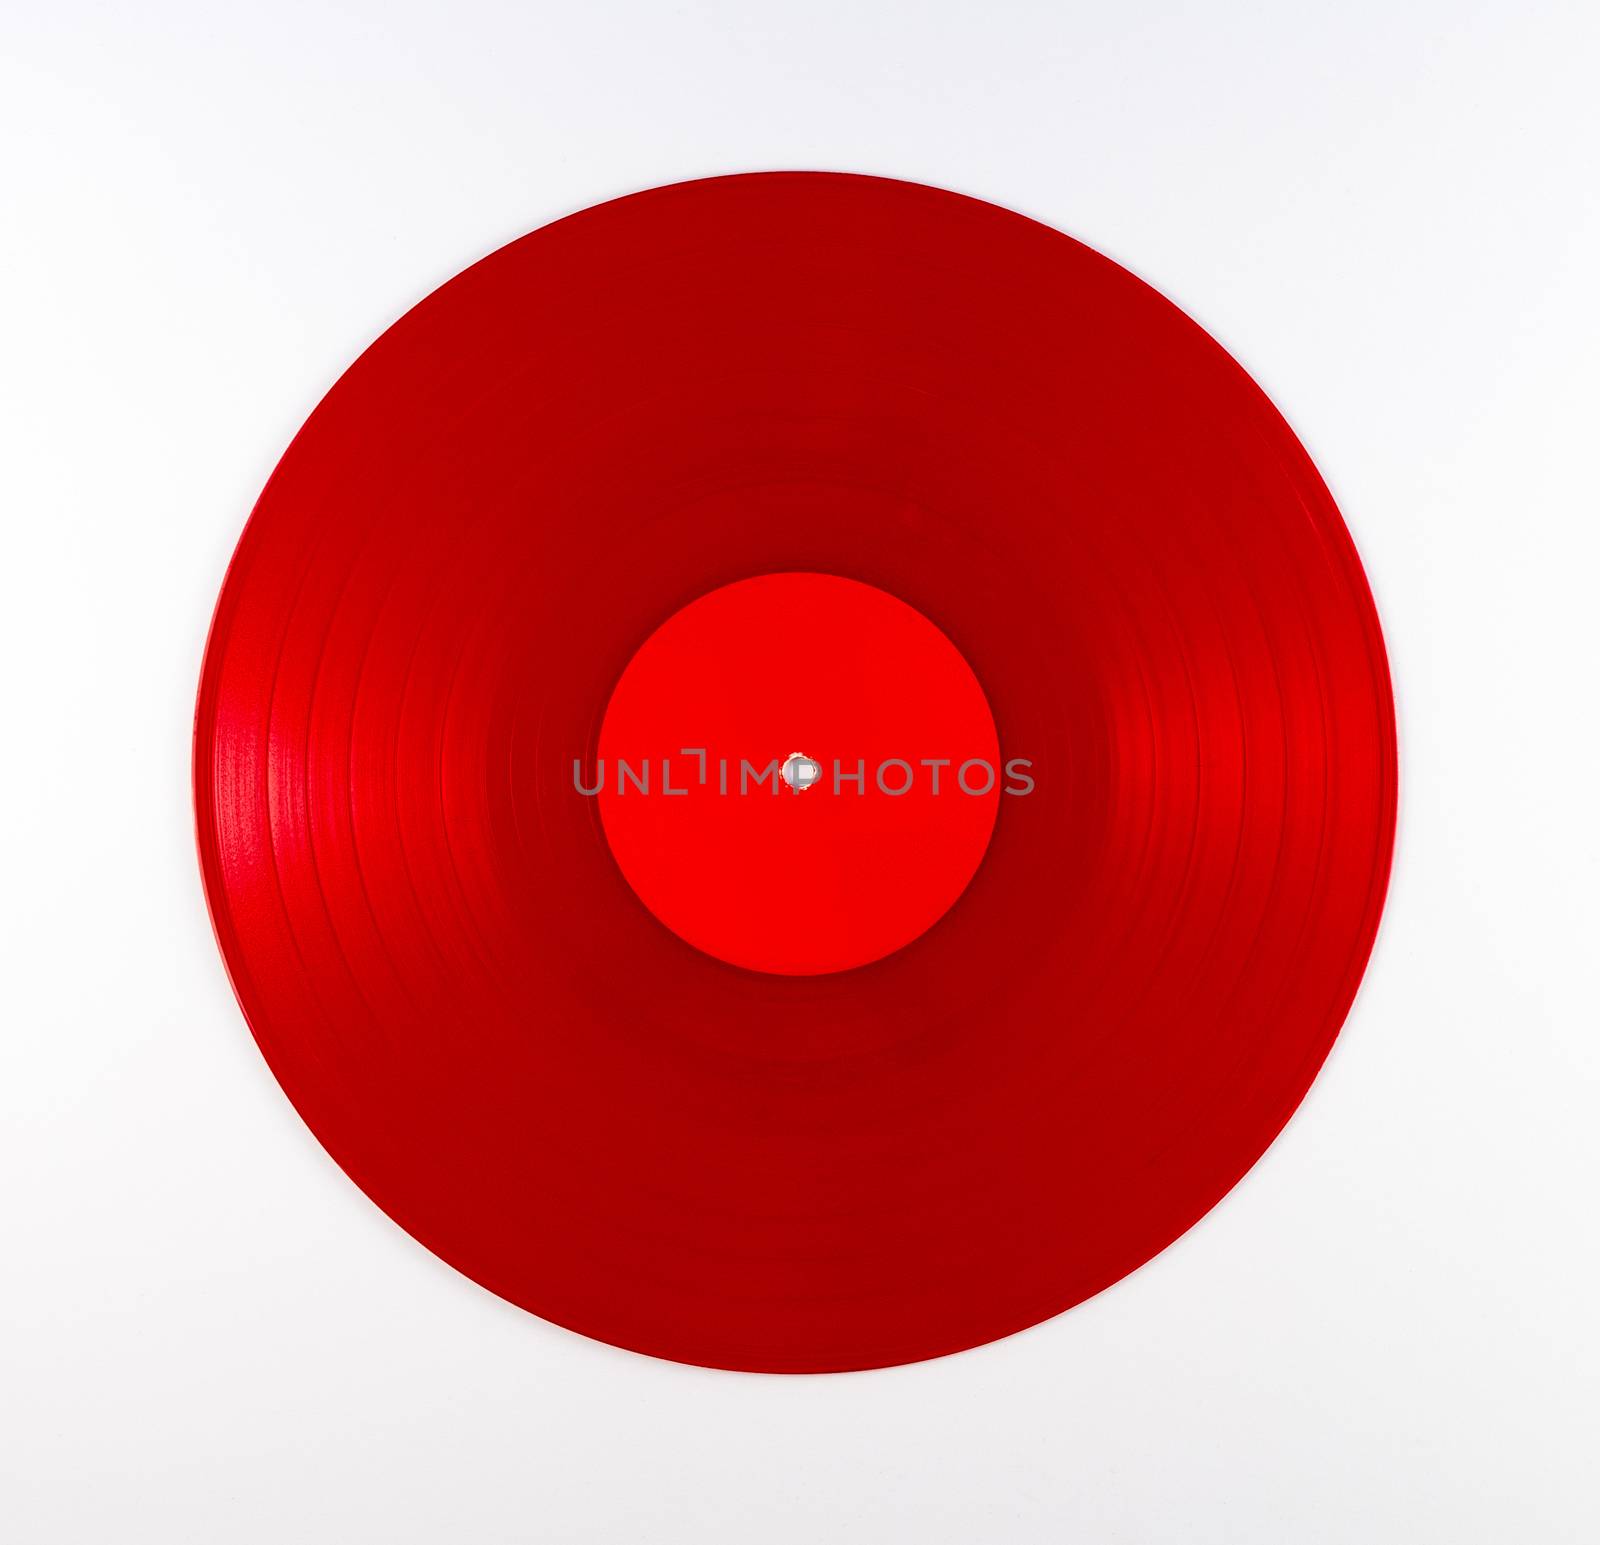 Vintage red vinyl record album on white background